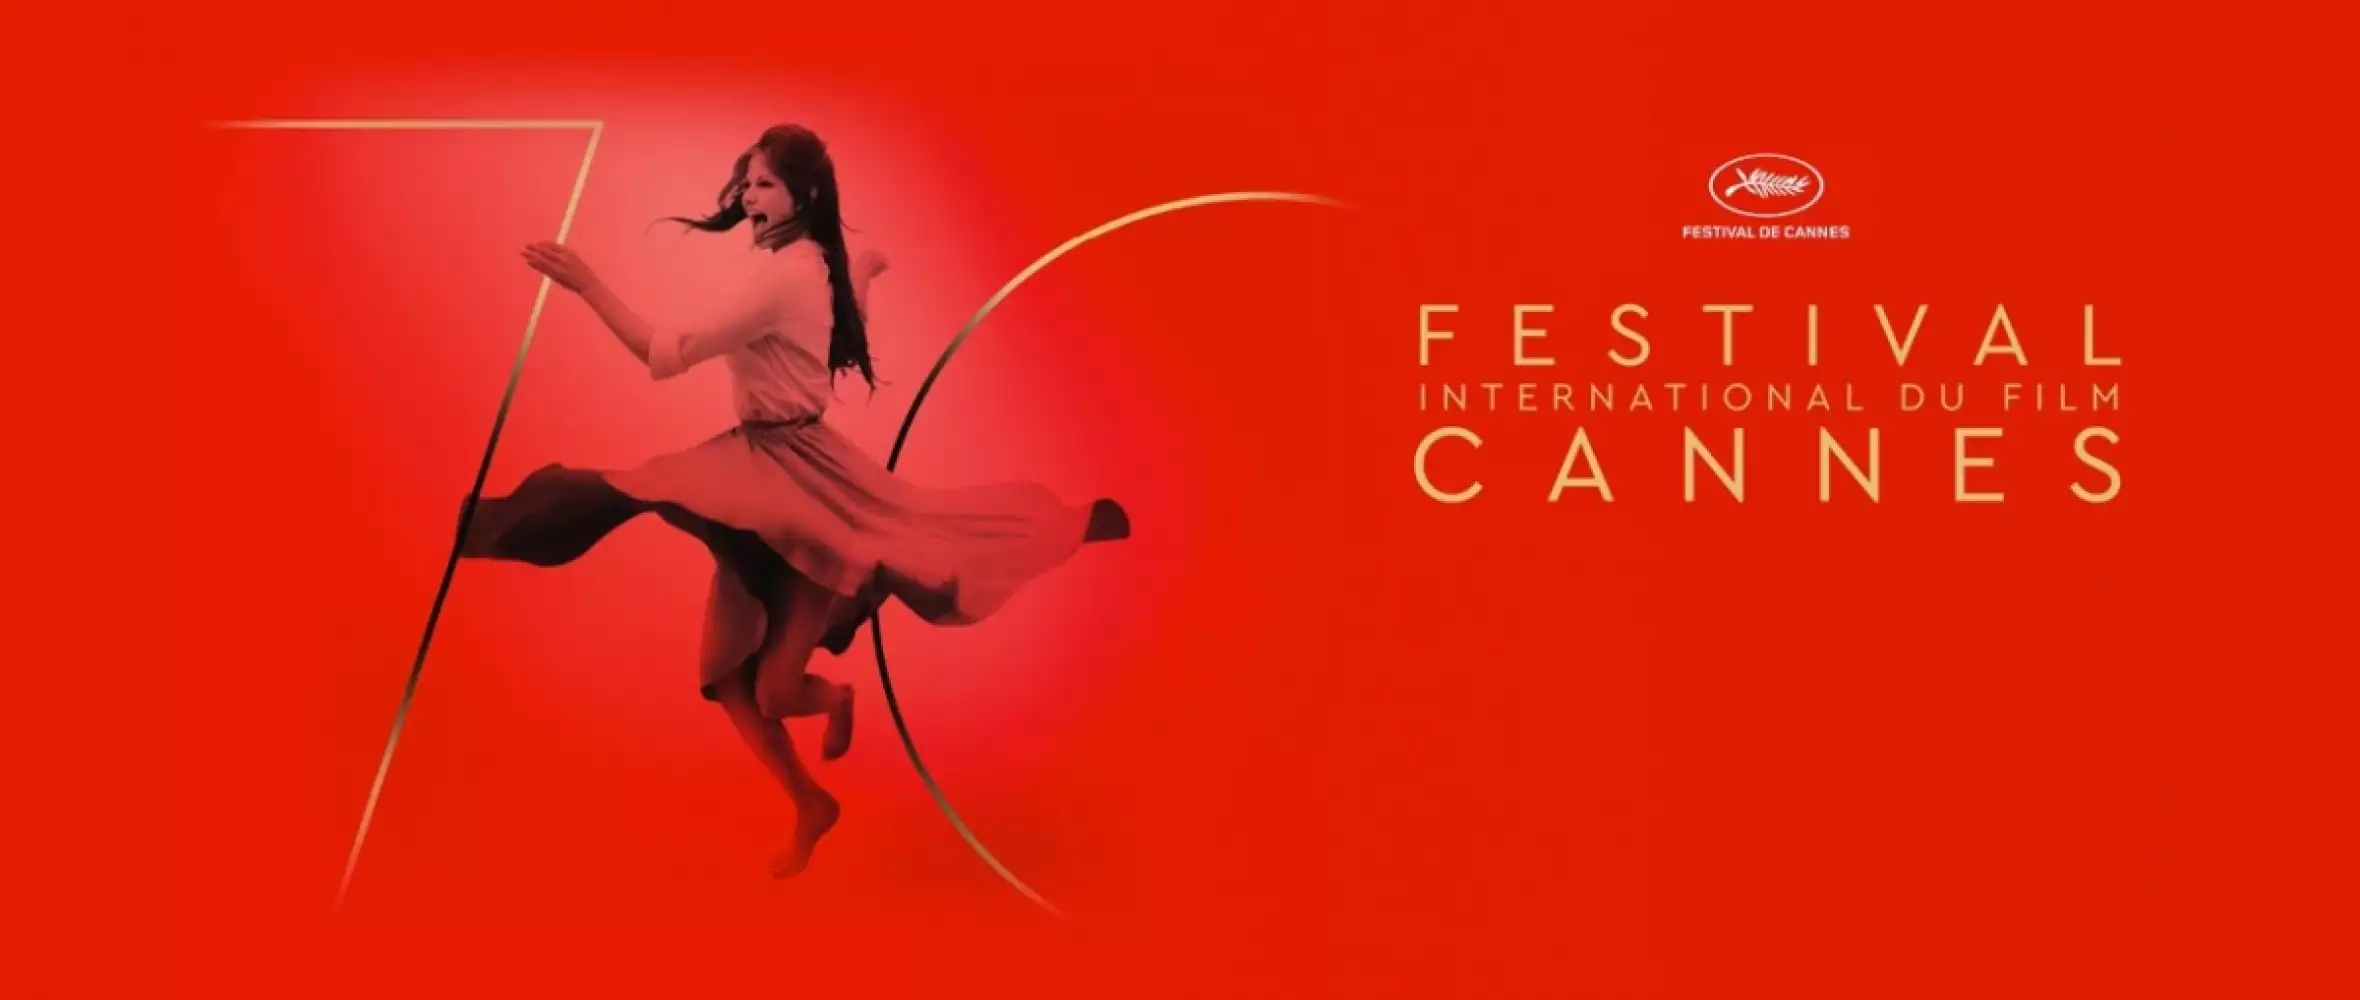 Czech Film Center and Czech Films at Cannes 2017